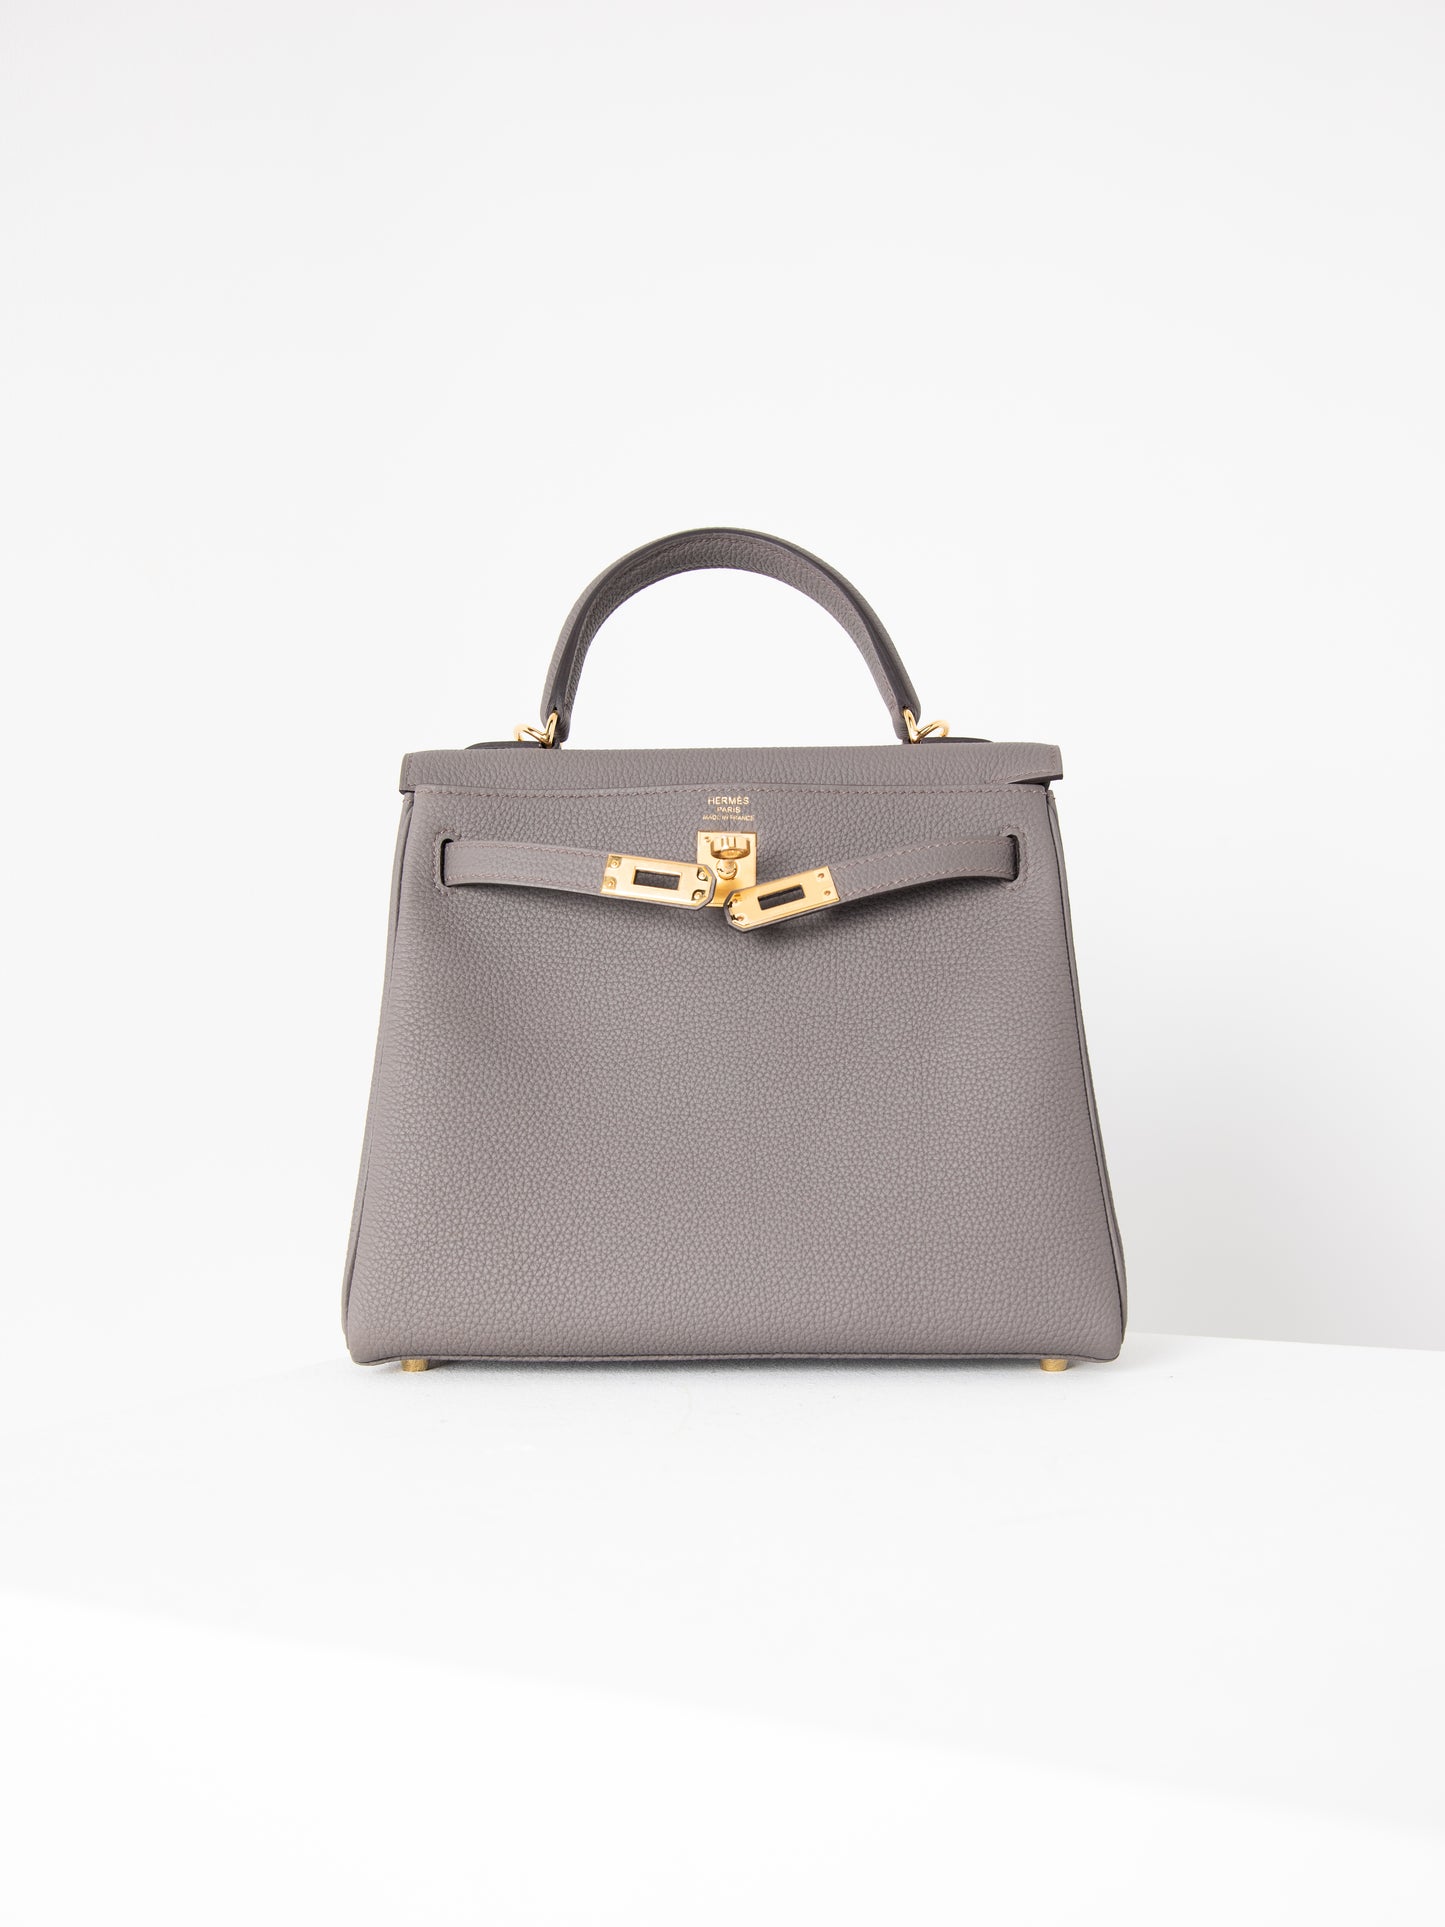 Amazing & Rare Hermès Kelly 25 Handbag Strap in Togo Grey Etain Leather, GHW